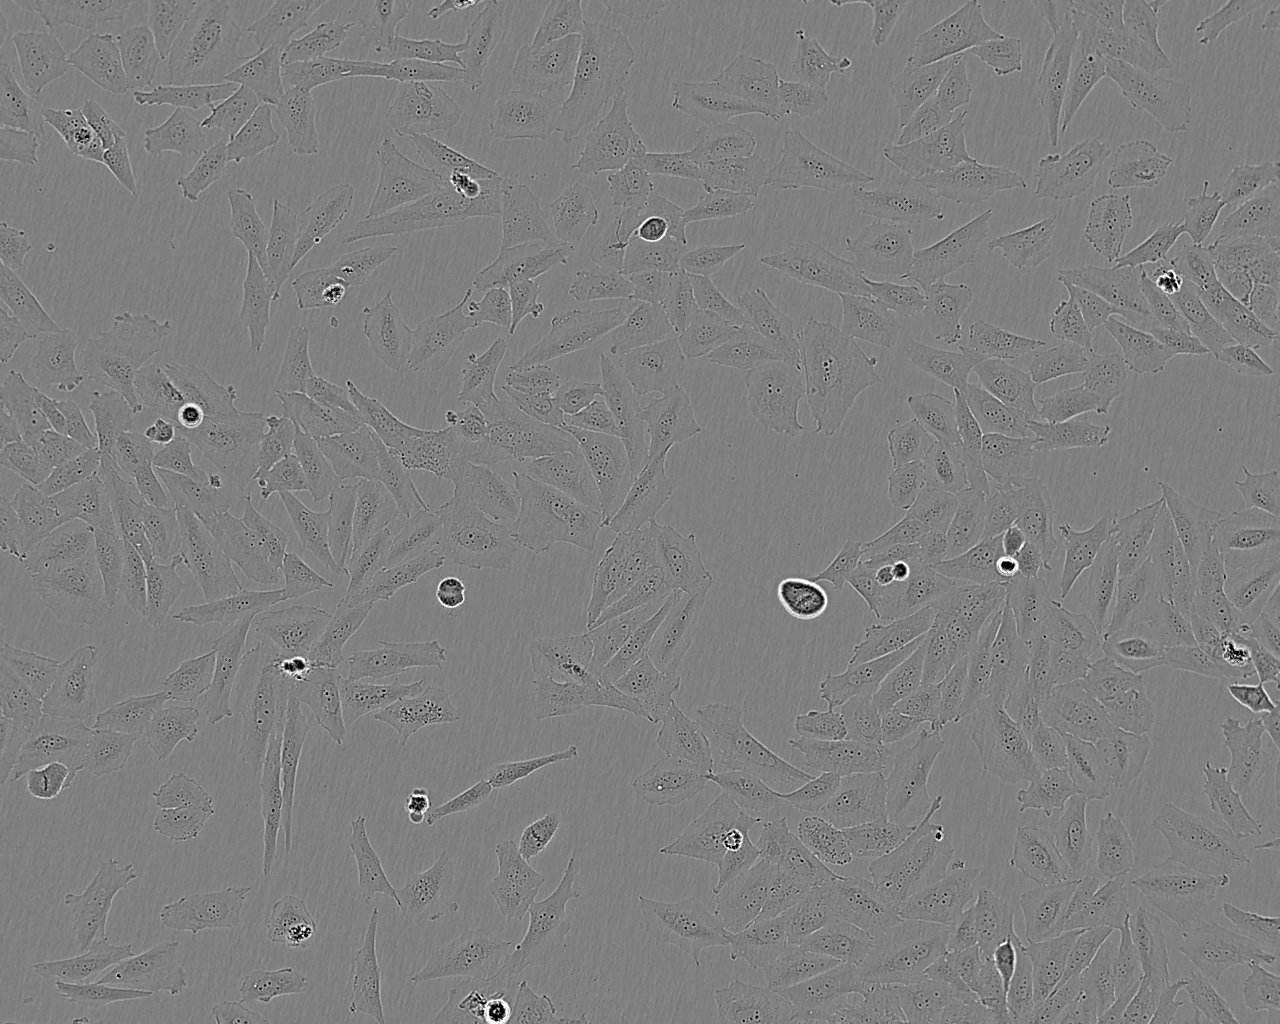 MKN45 epithelioid cells人胃癌细胞系,MKN45 epithelioid cells